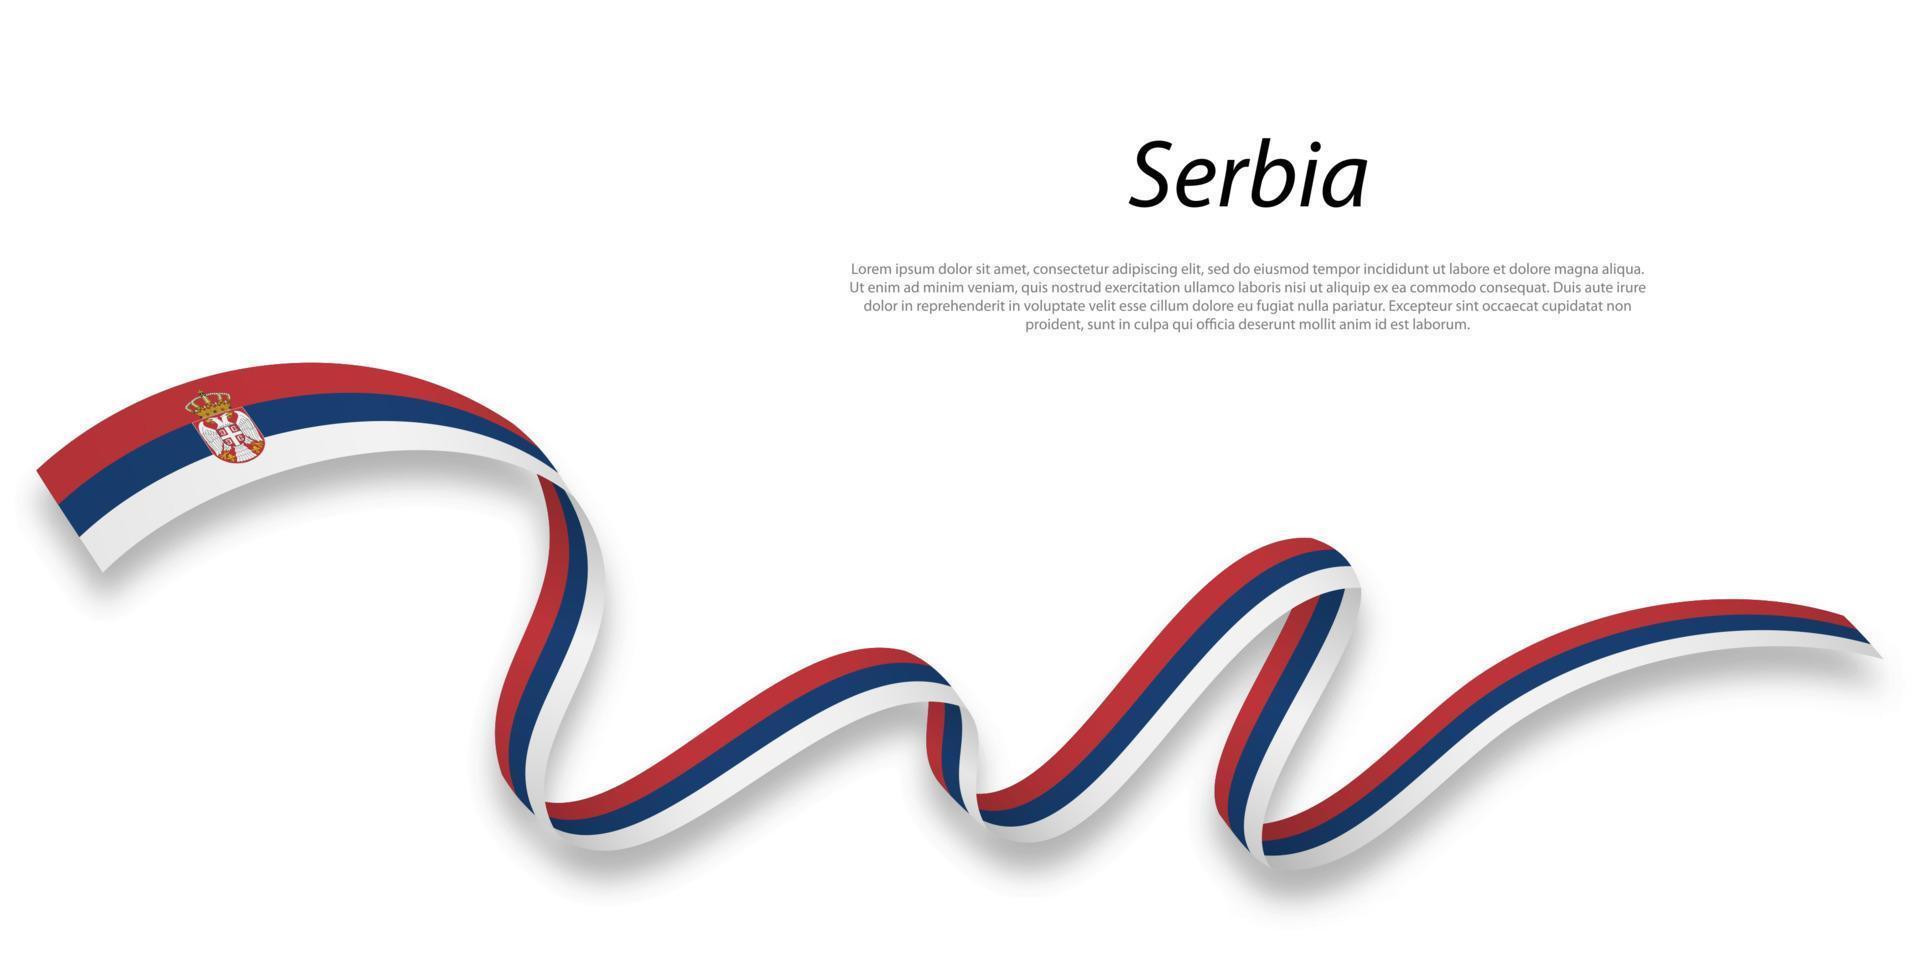 ondulación cinta o bandera con bandera de serbia vector